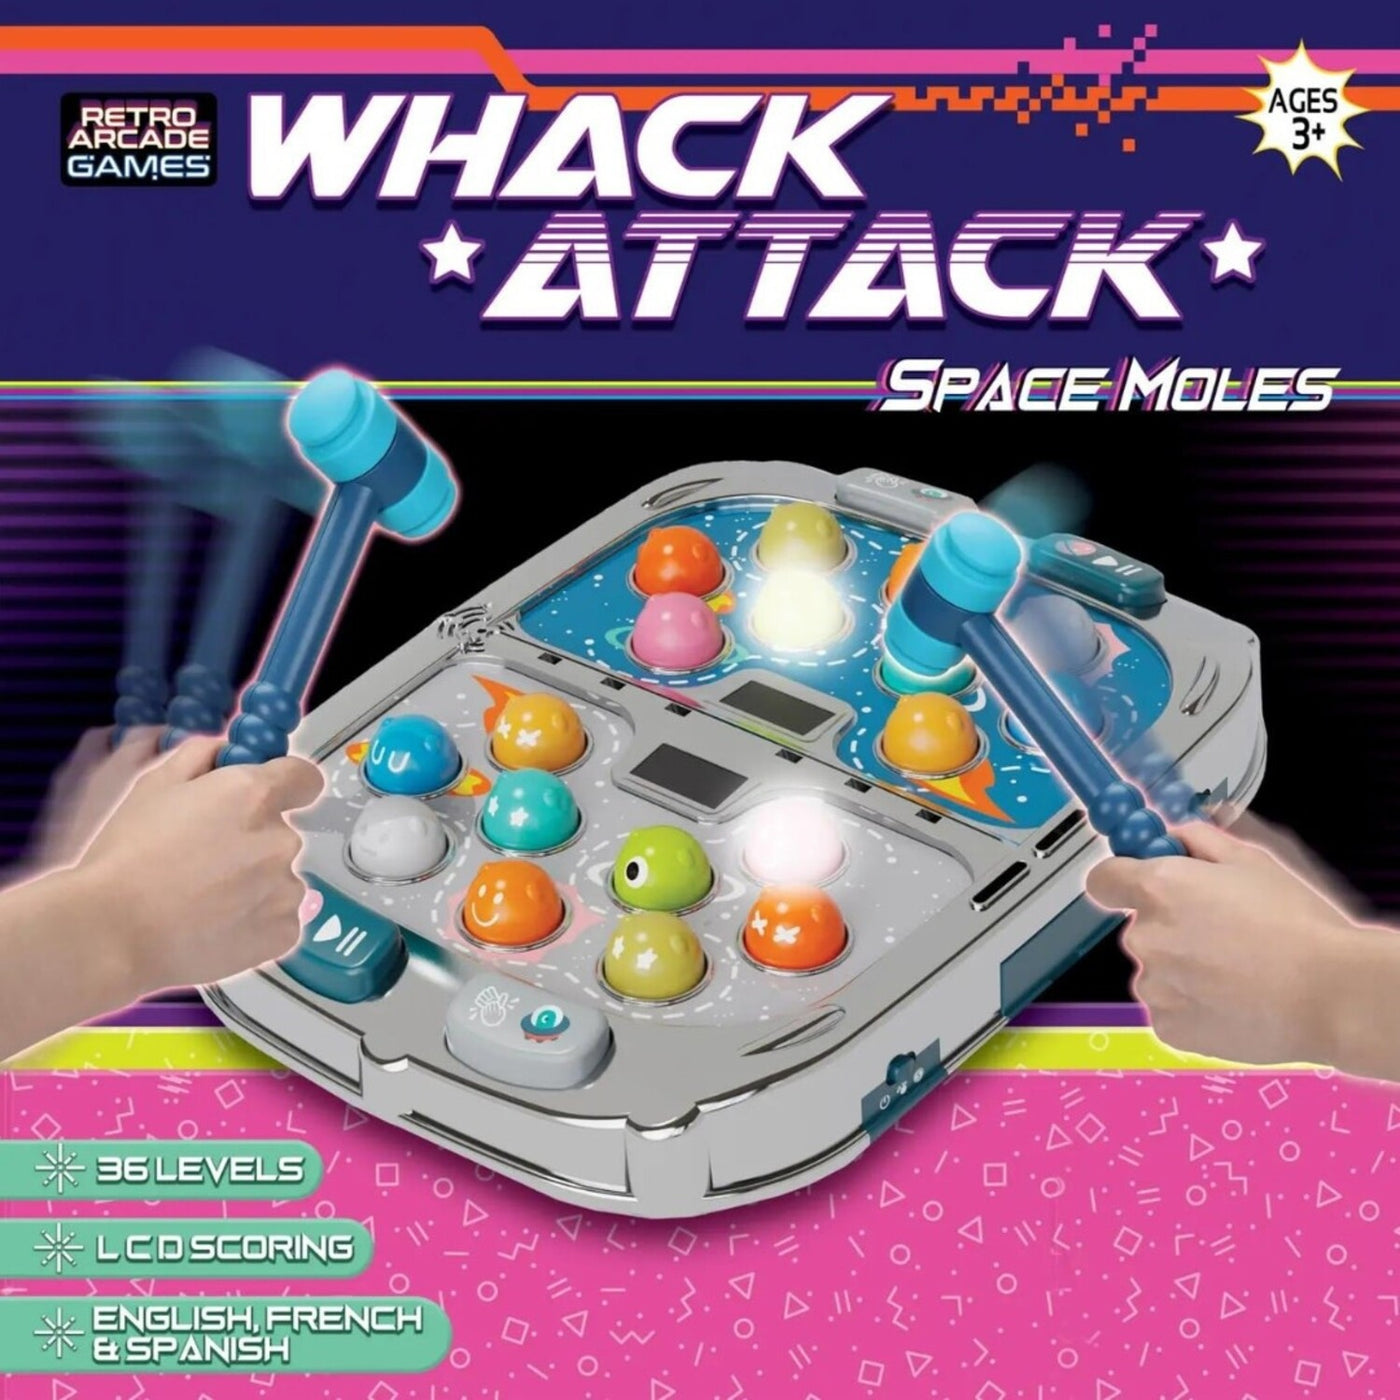 Whack Attack